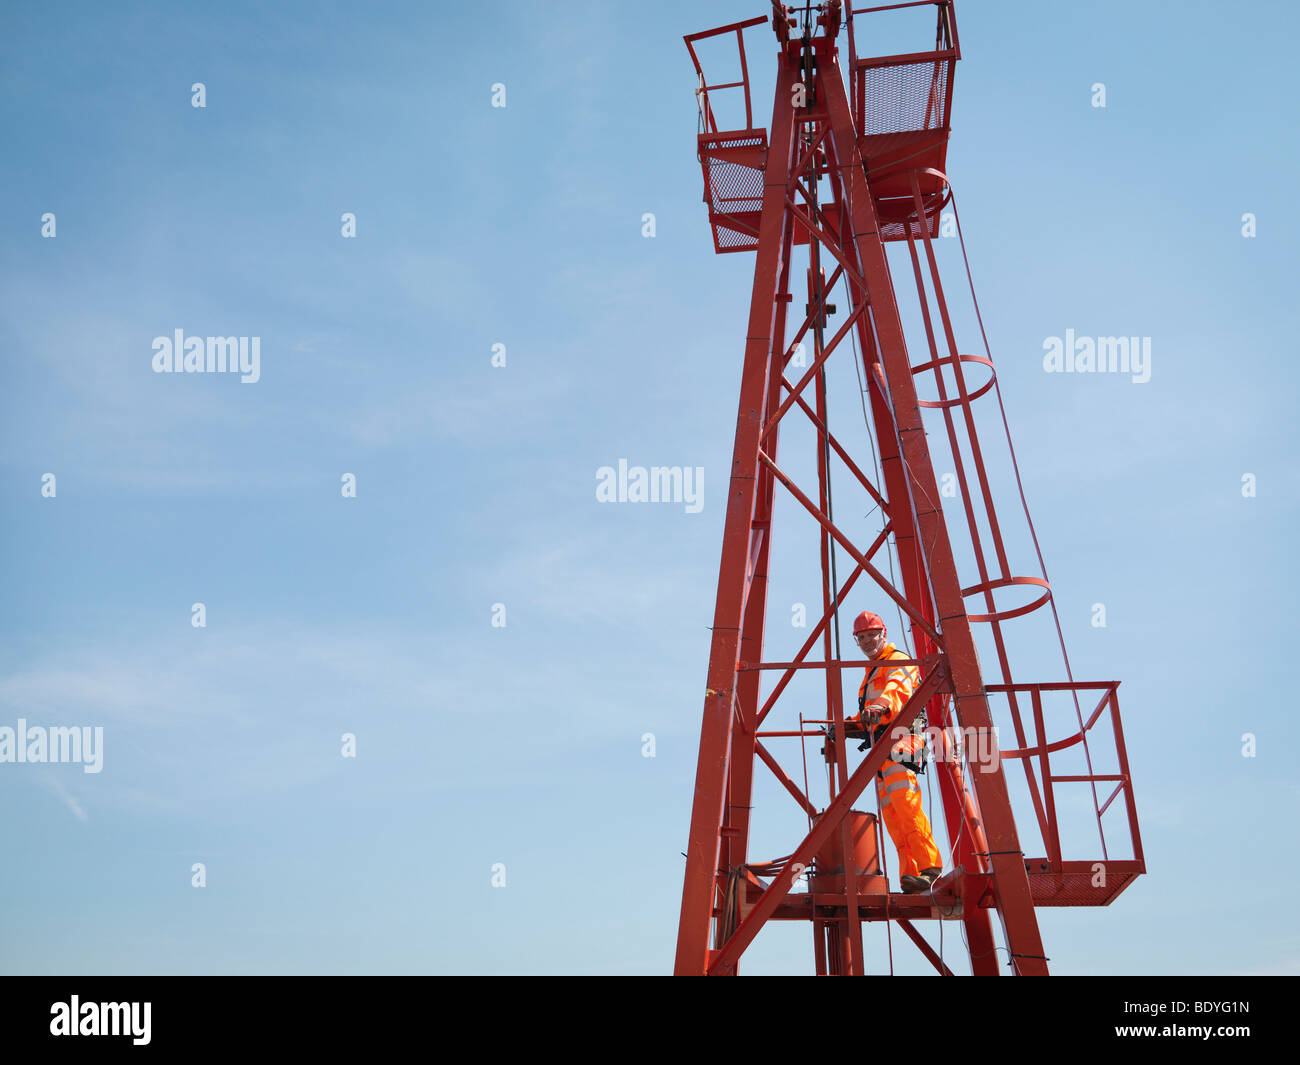 Crane Worker High Up On Crane Stock Photo